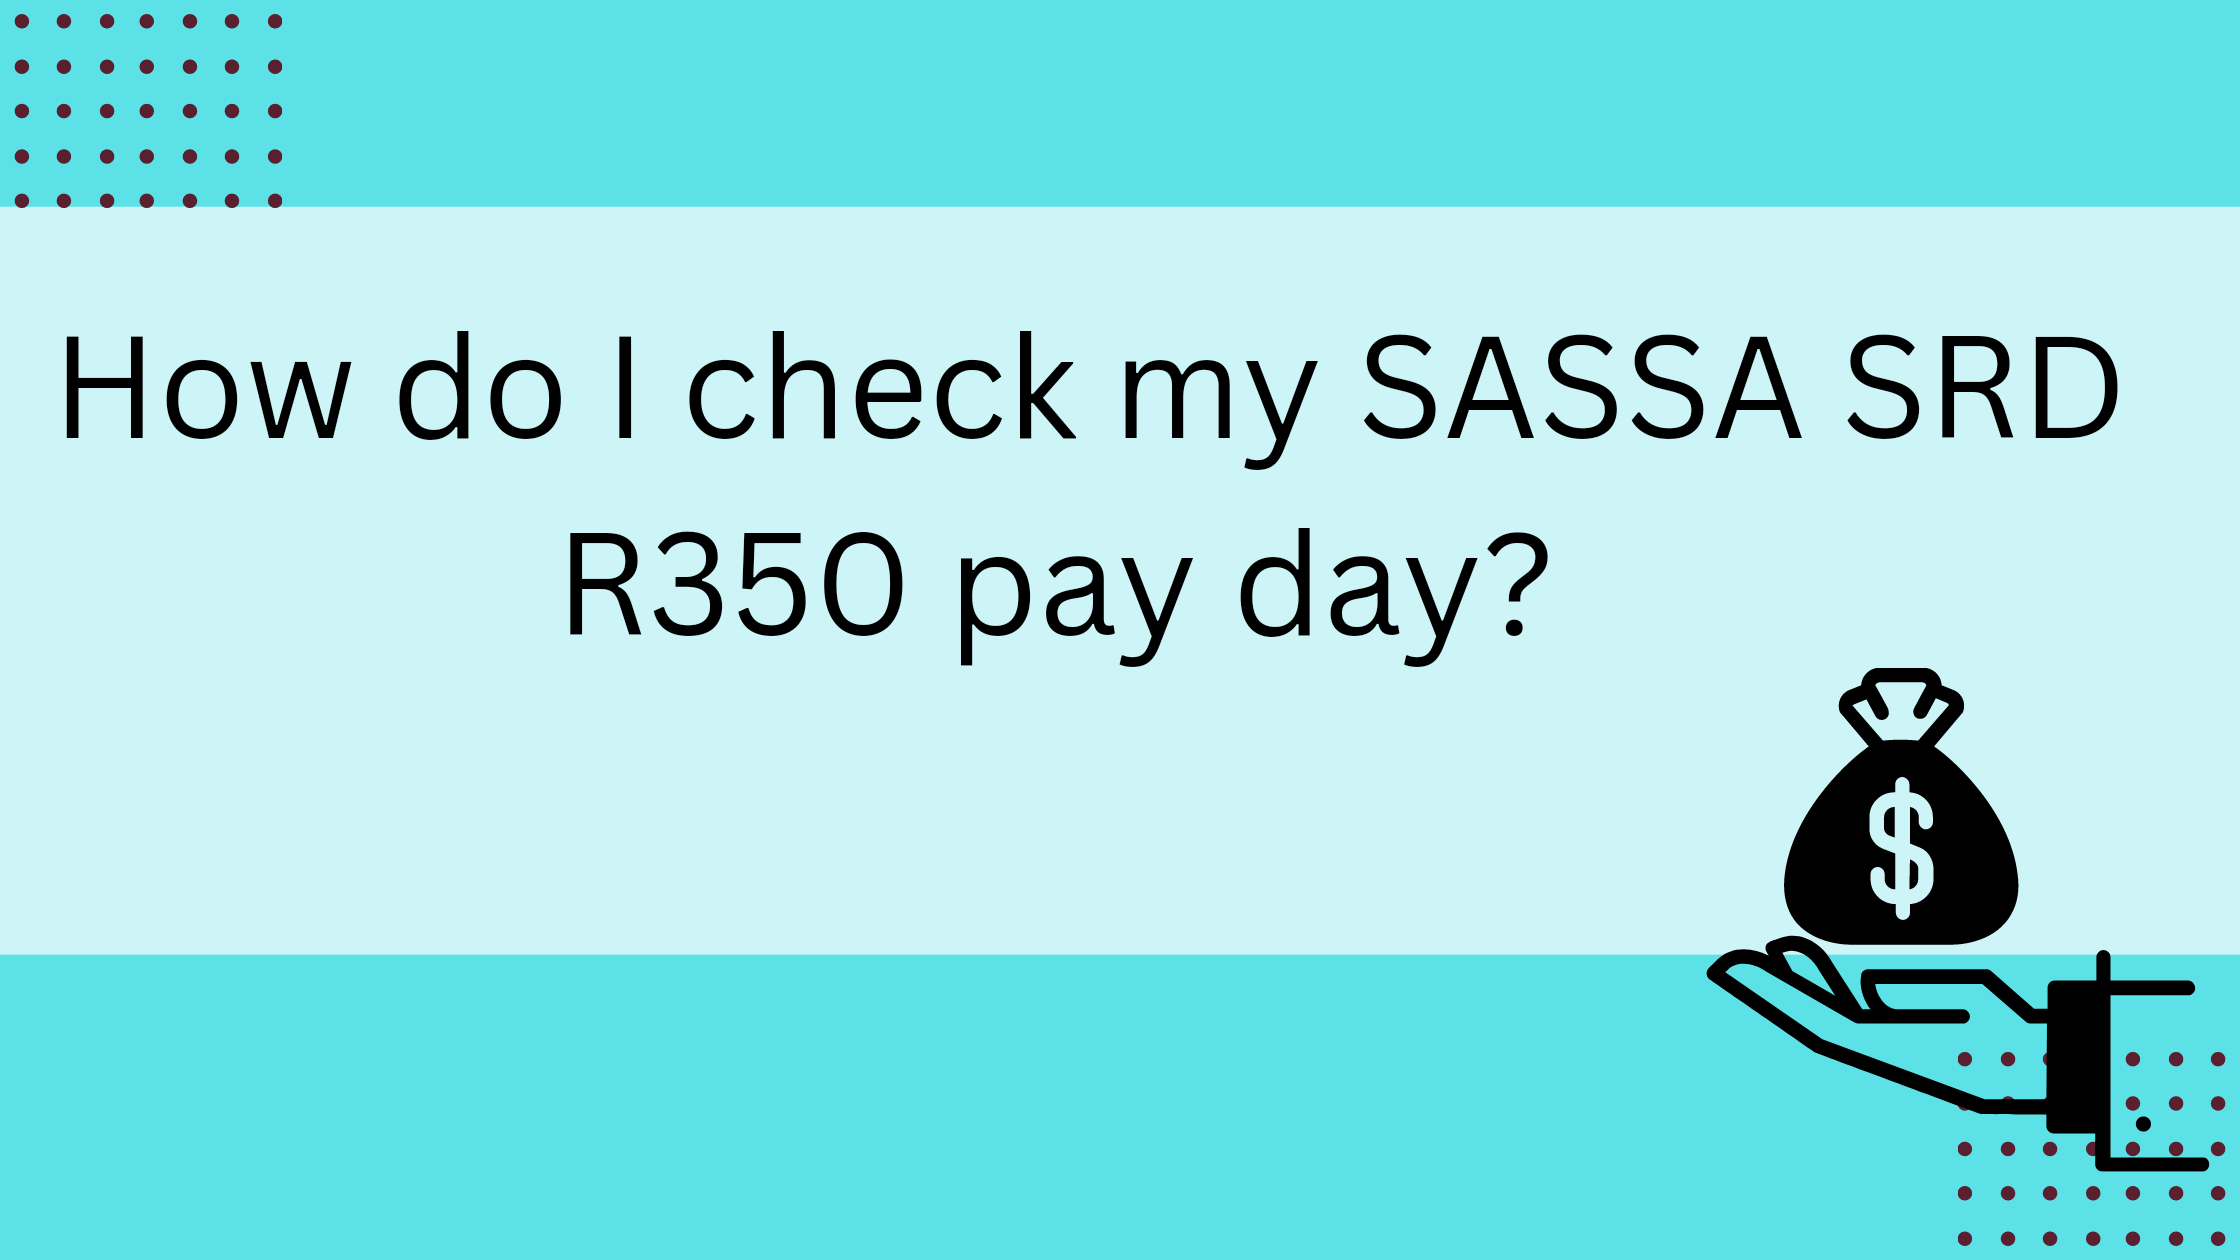 How do I check my SASSA SRD R350 pay day?